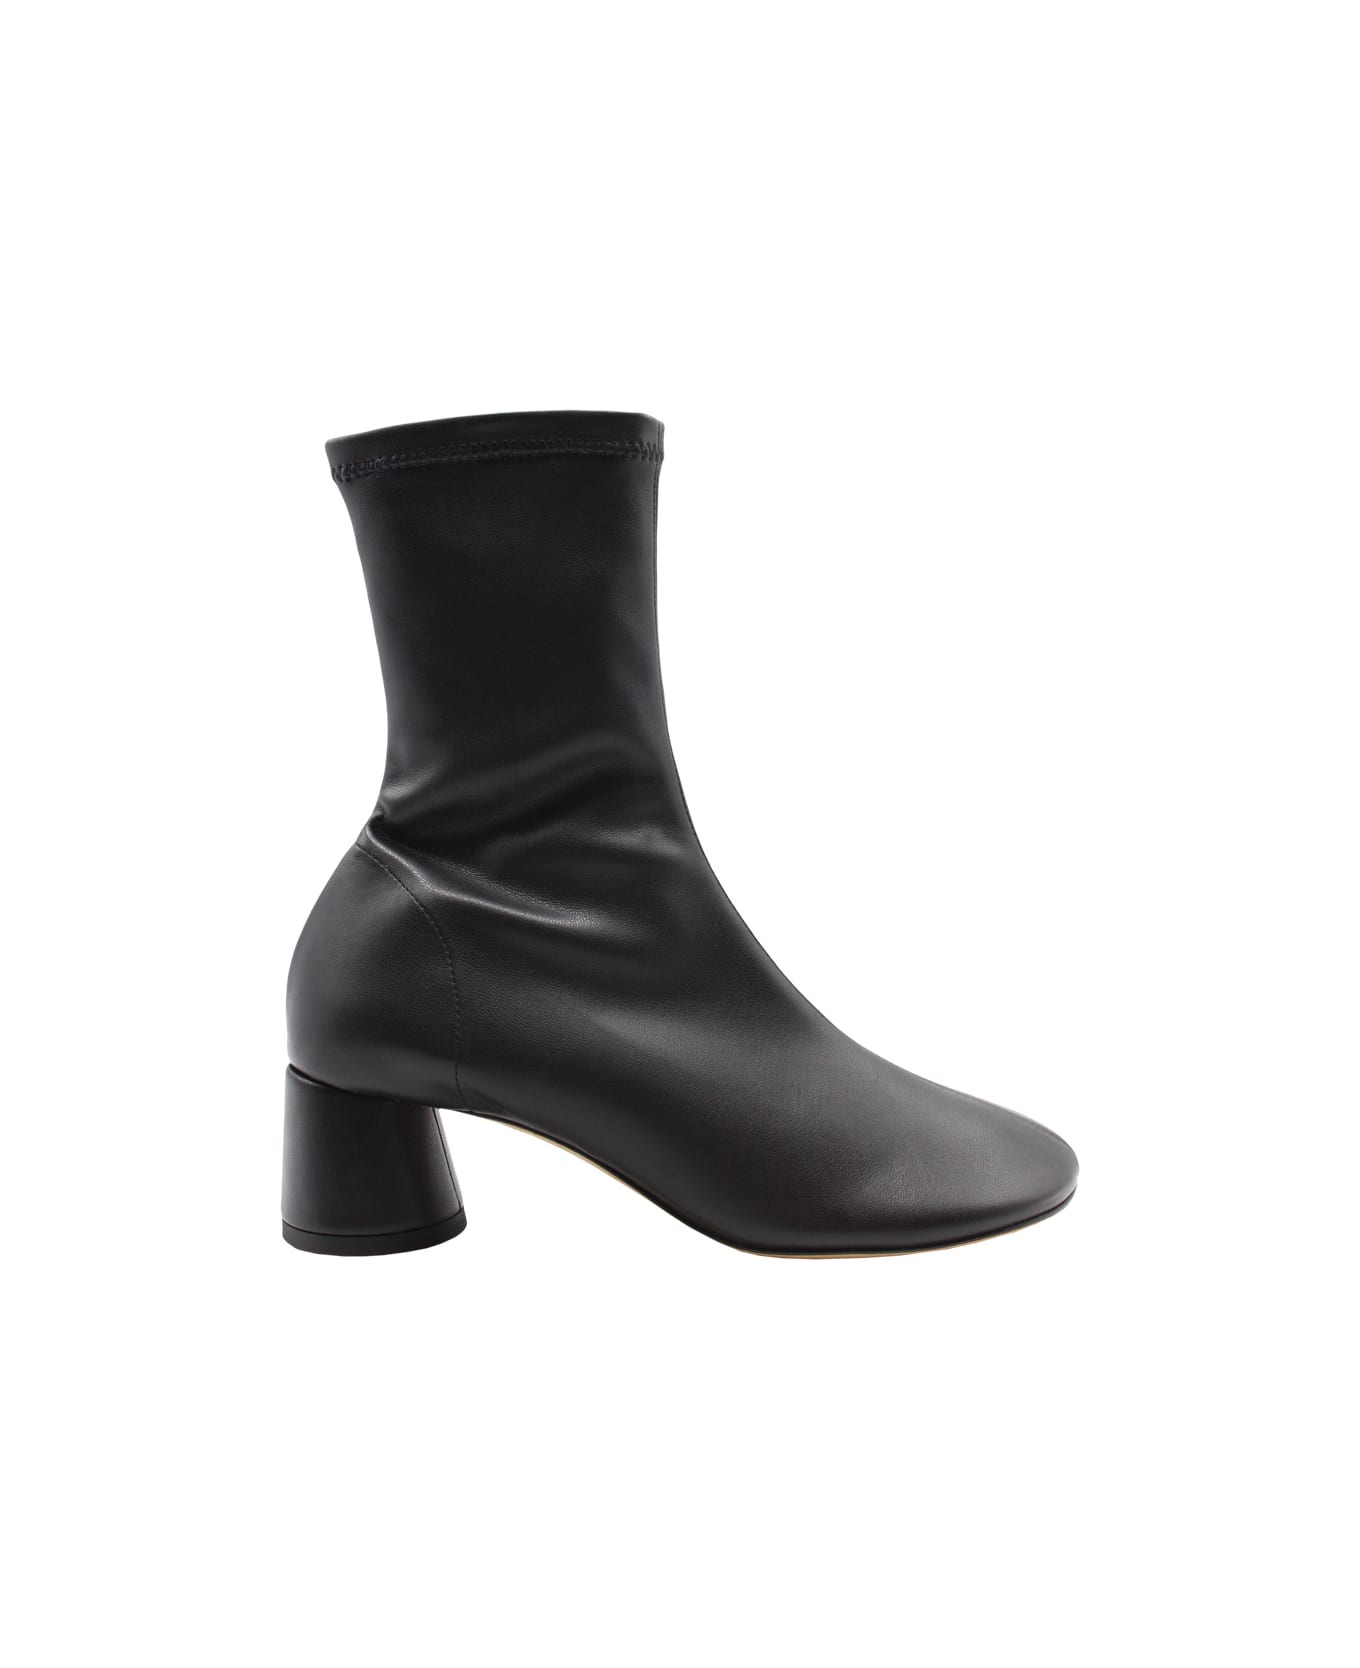 Proenza Schouler Glove Stretch Ankle Boots - Black